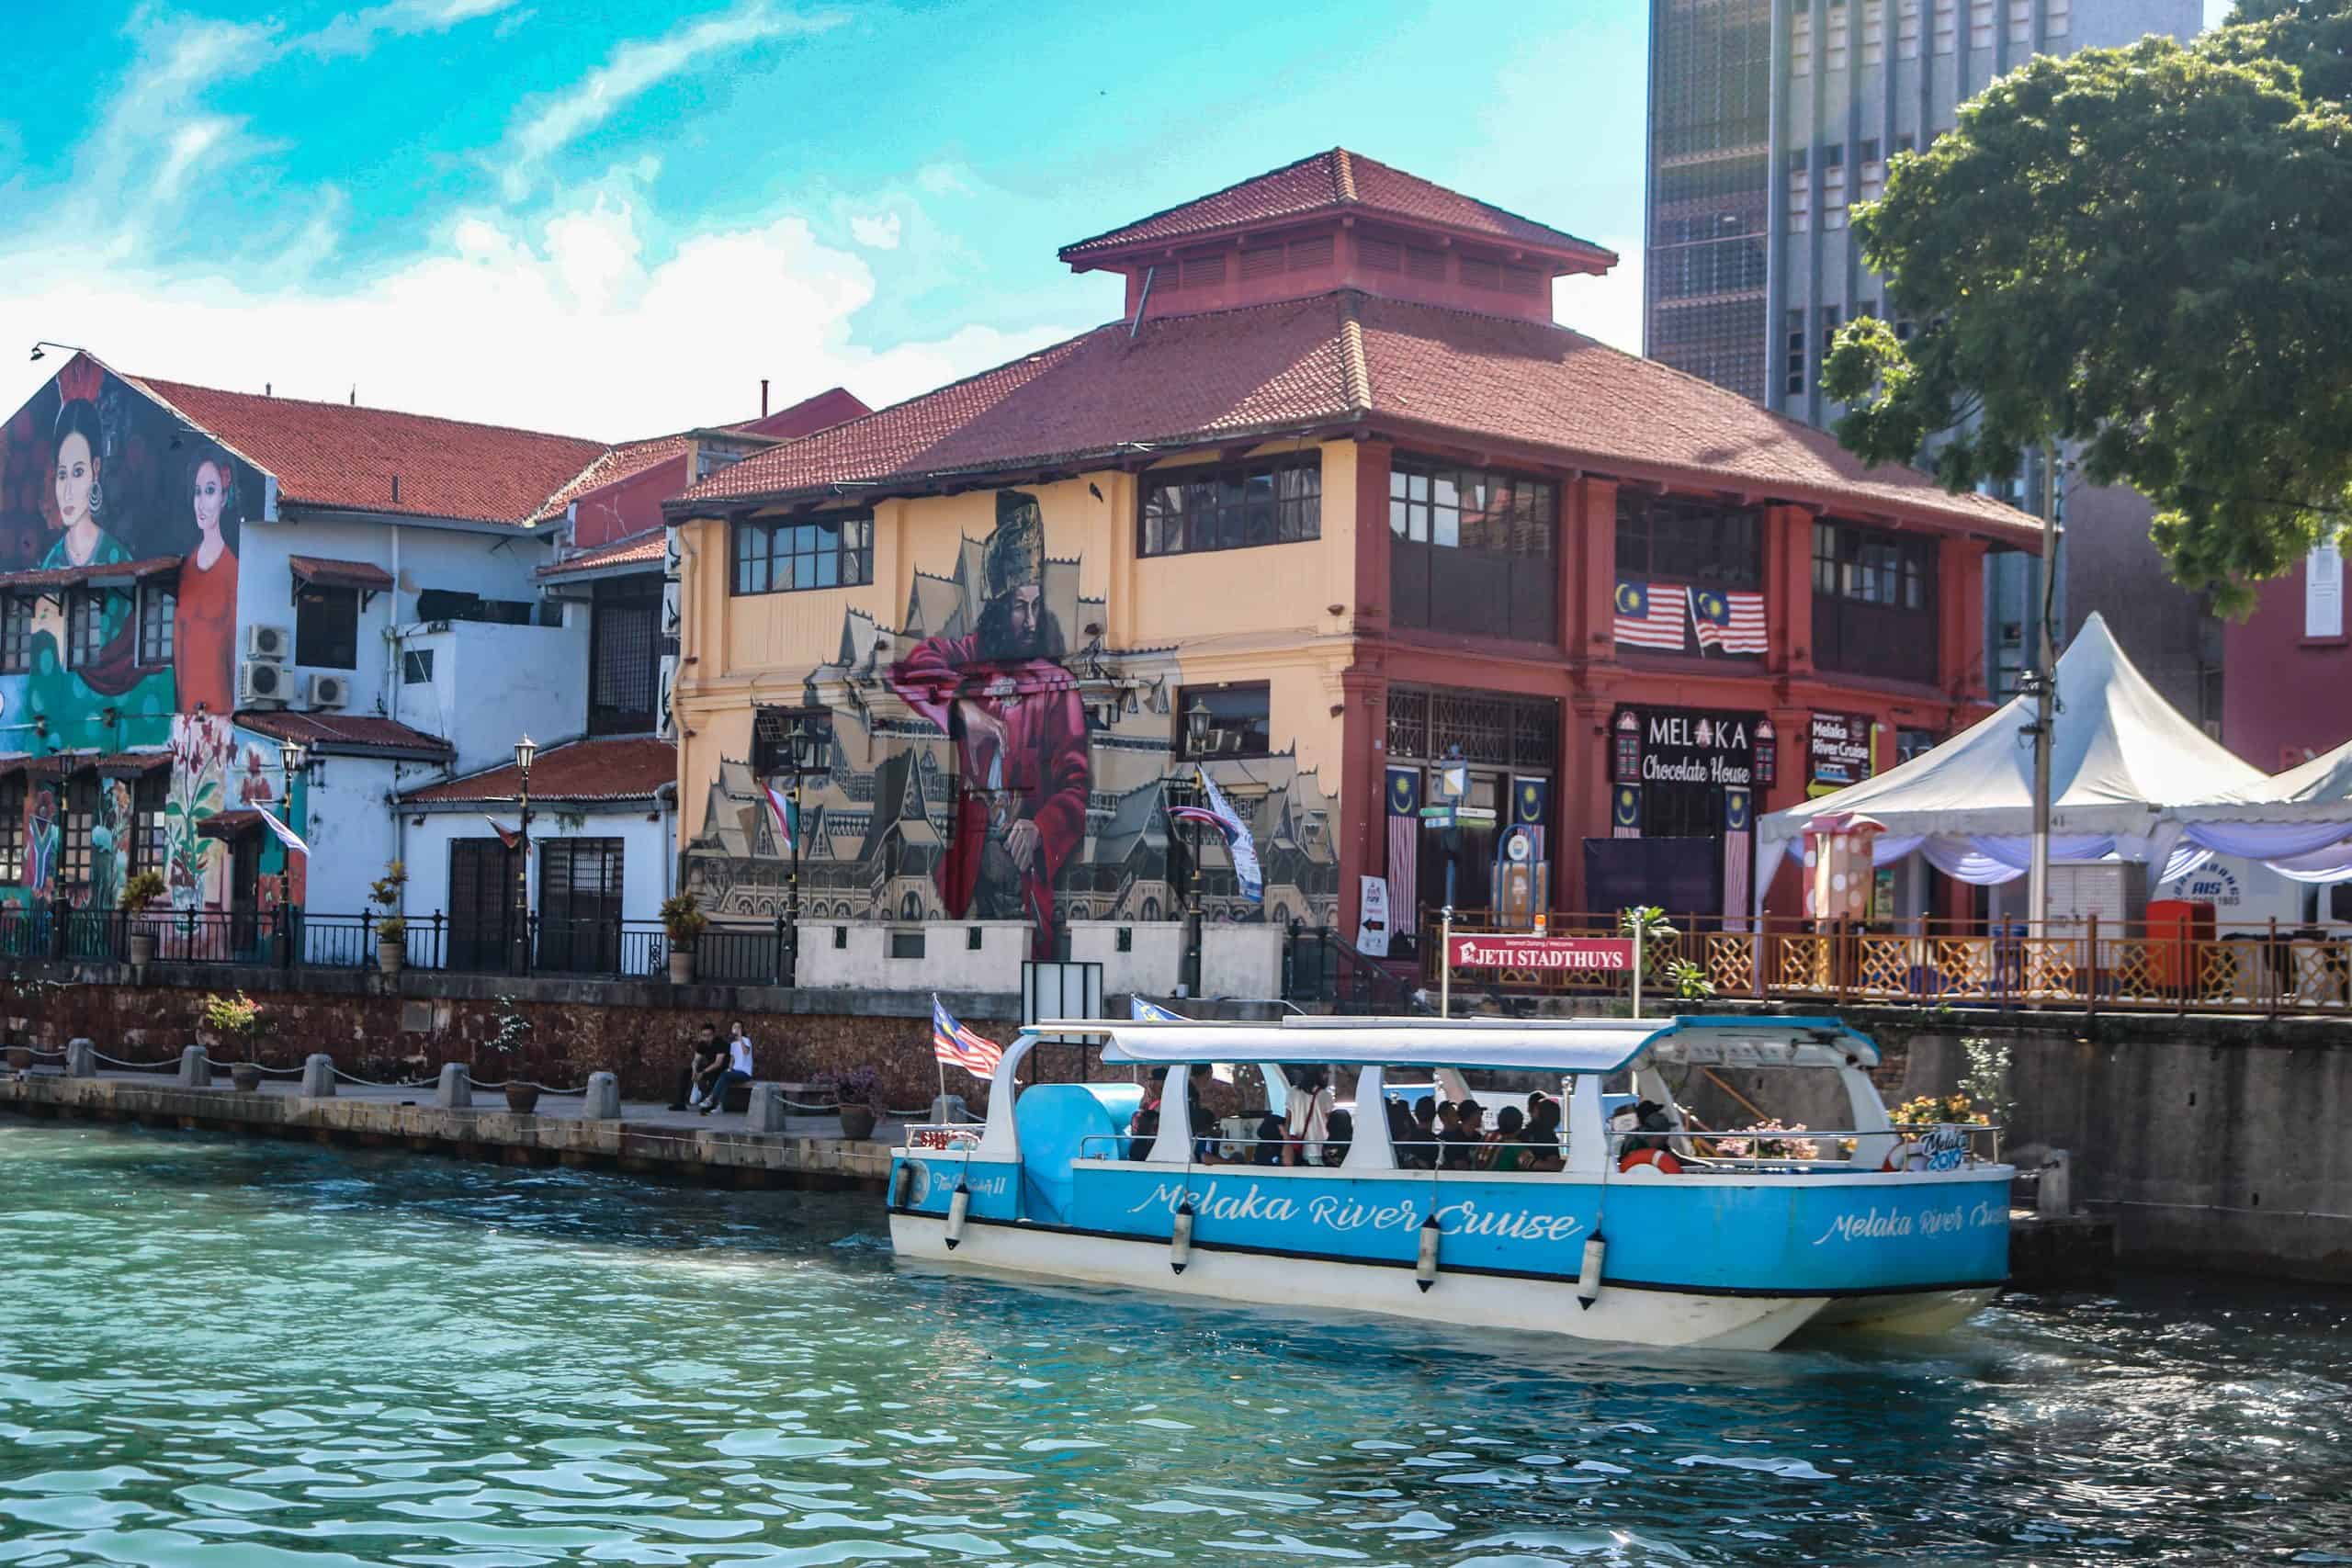 Should You Take the Melaka River Cruise